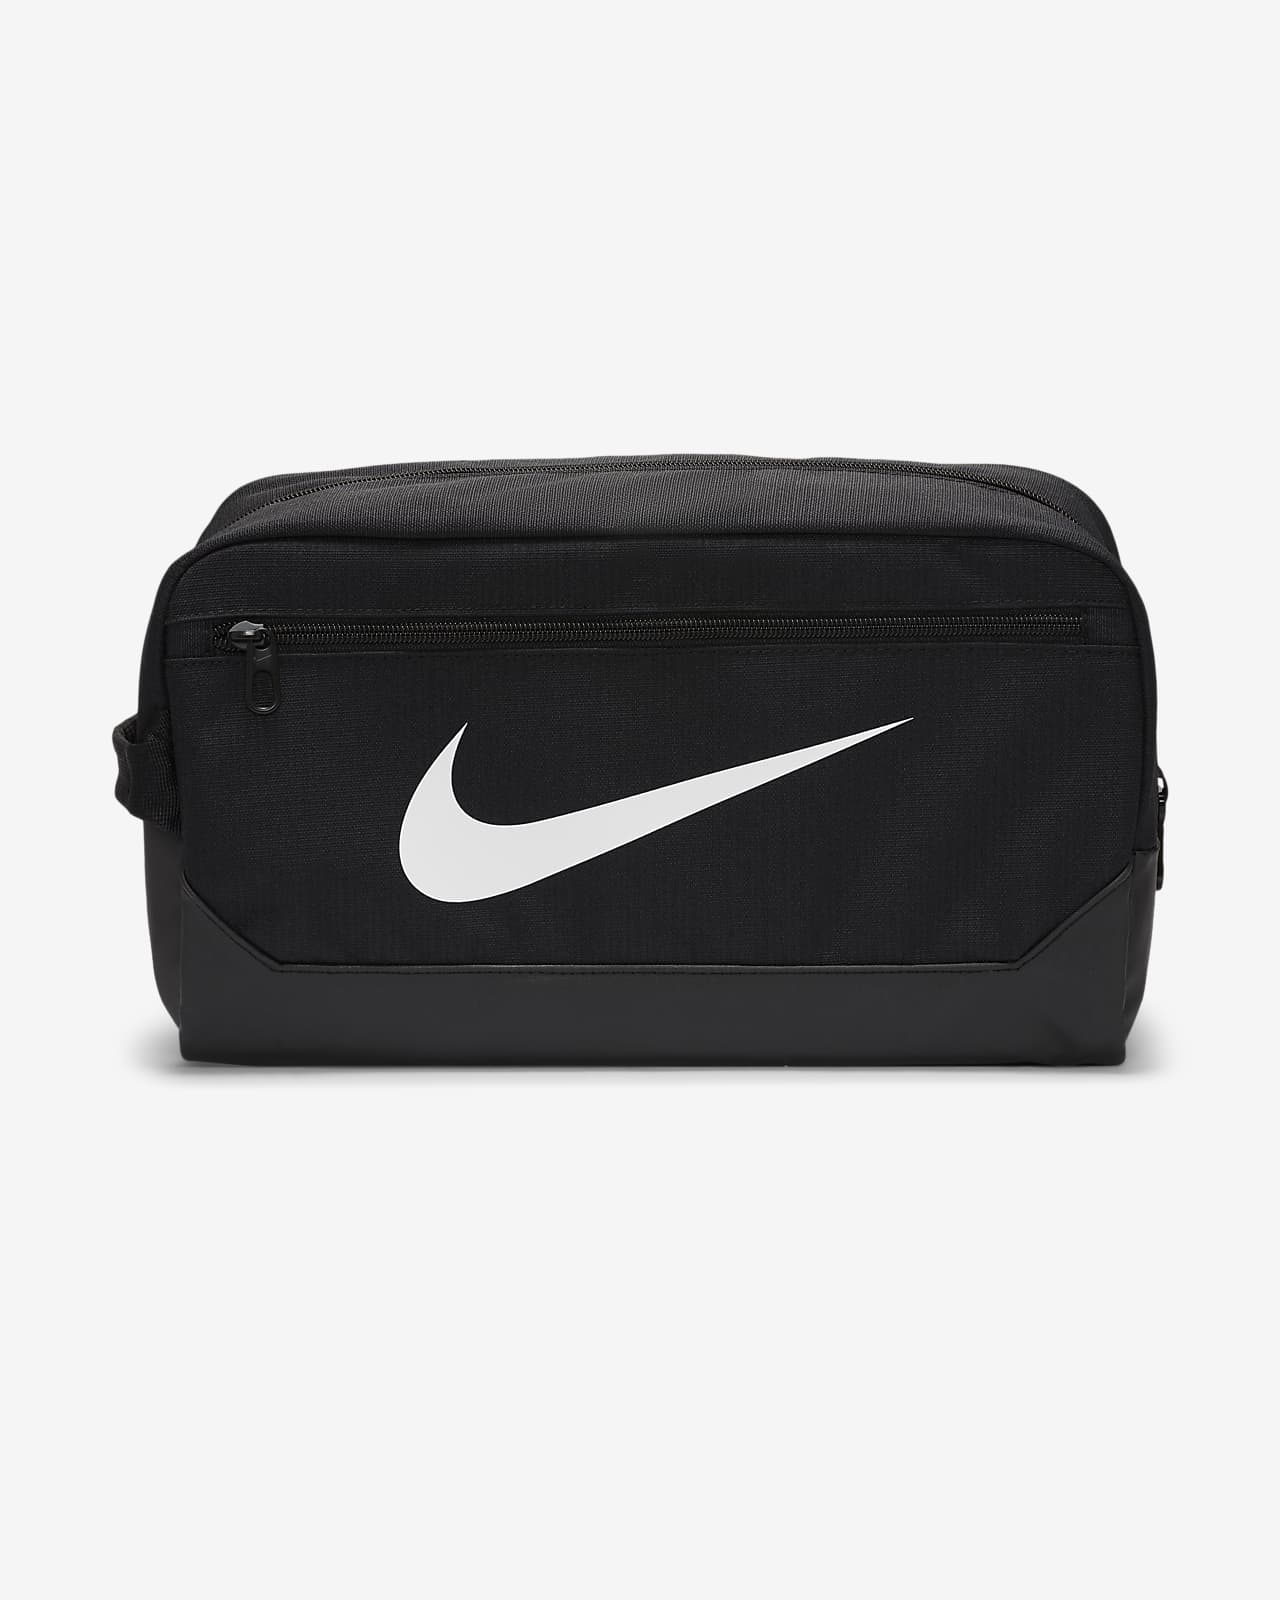 Sport bag Nike Brasilia 9.0 XS Duffel - black, Tennis Zone